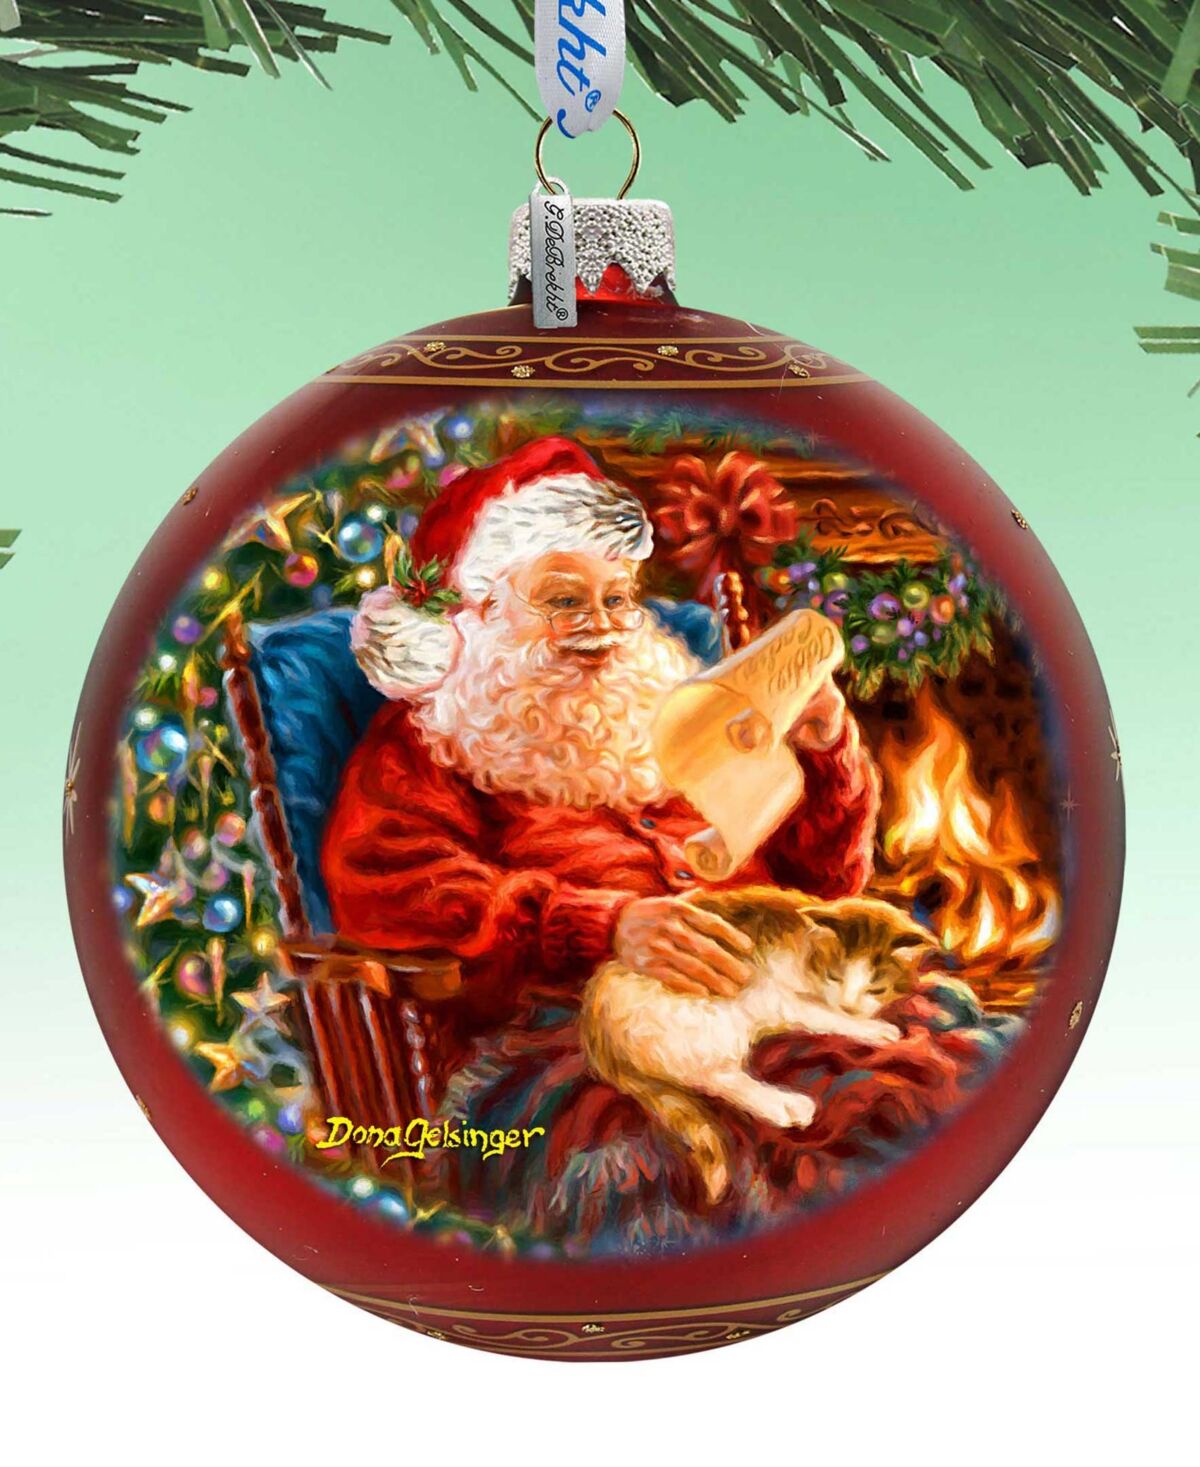 Designocracy House Warming Santa Large Holiday Glass Collectible Ornaments D. Gelsinger - Multi Color